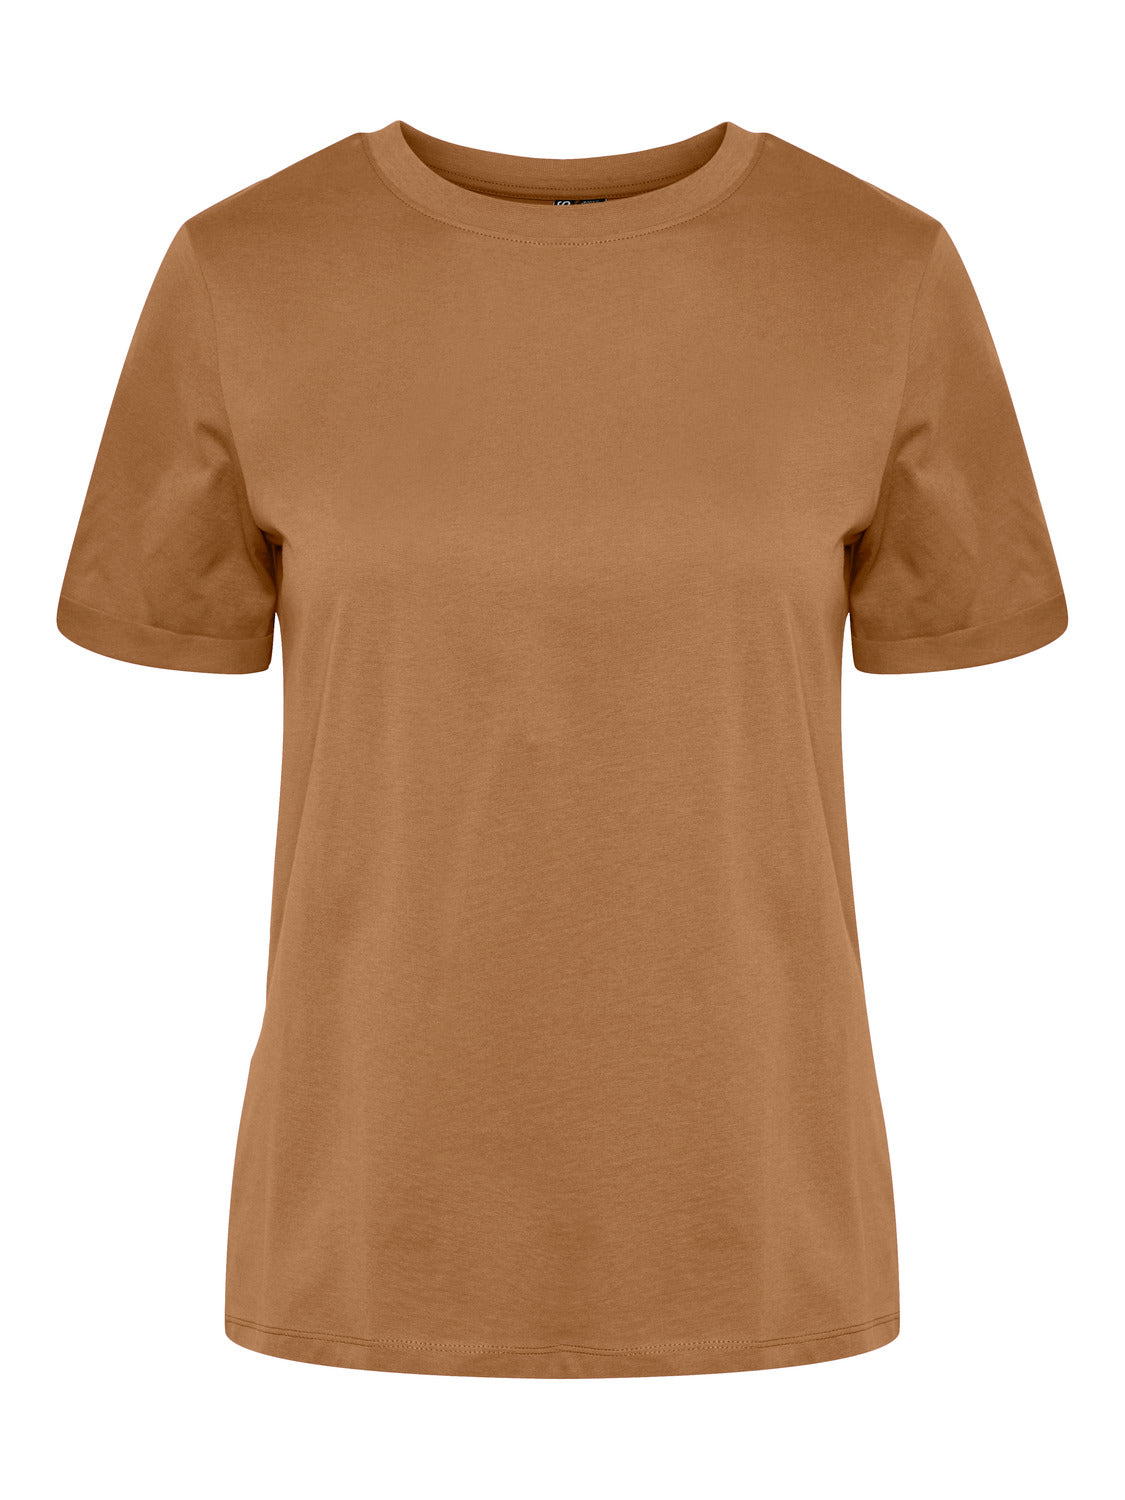 PCRIA T-Shirt - Almond